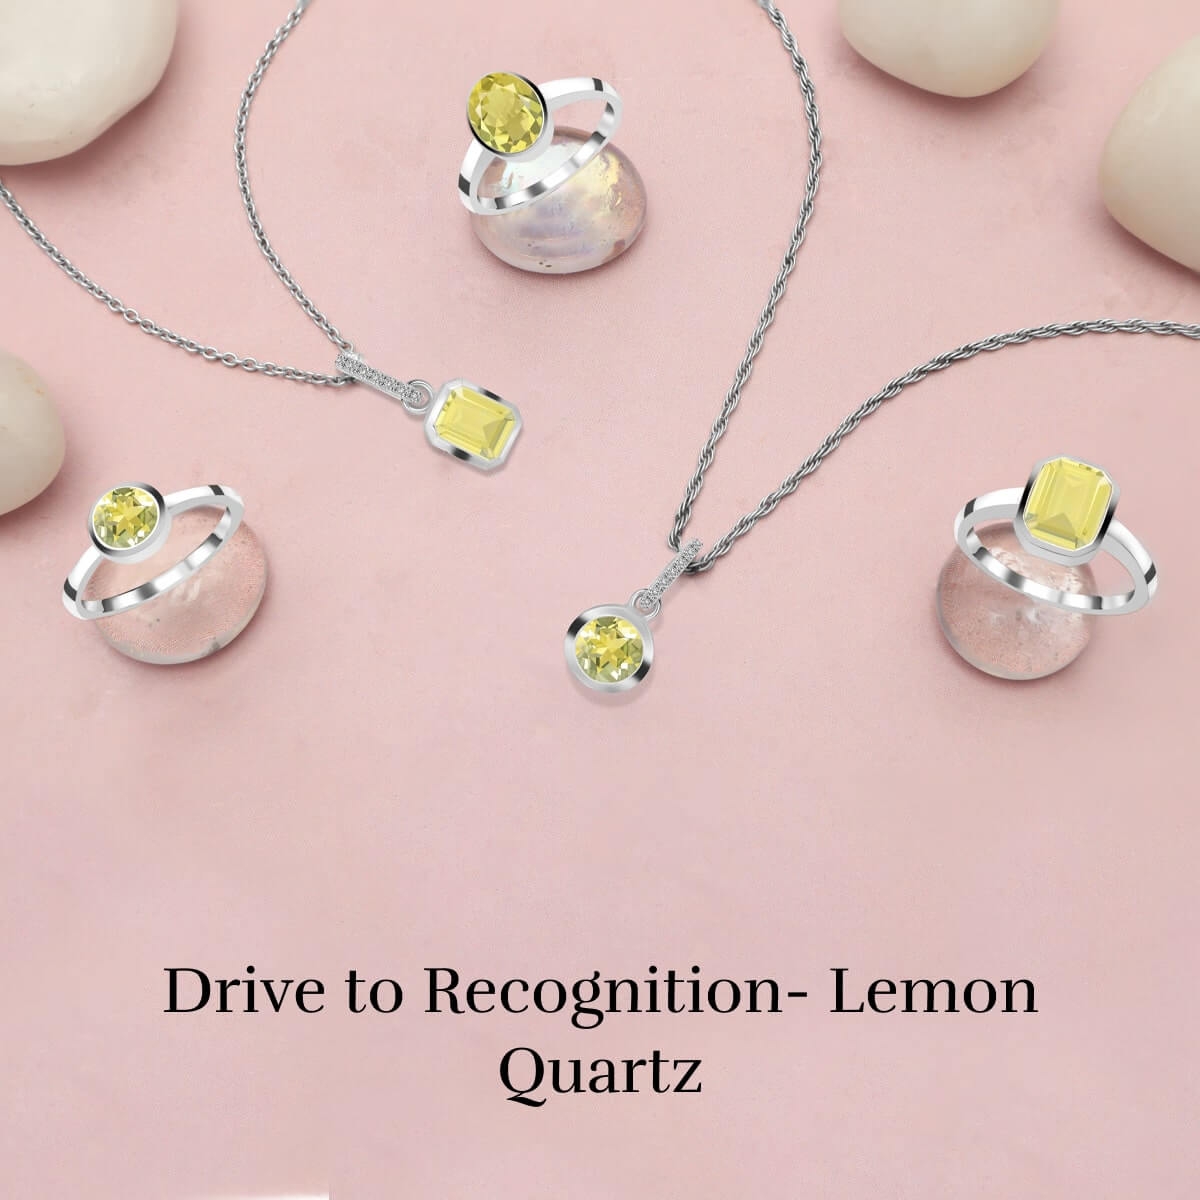 Lemon Quartz Meaning, Benefits, Healing Properties and Zodiac Signs